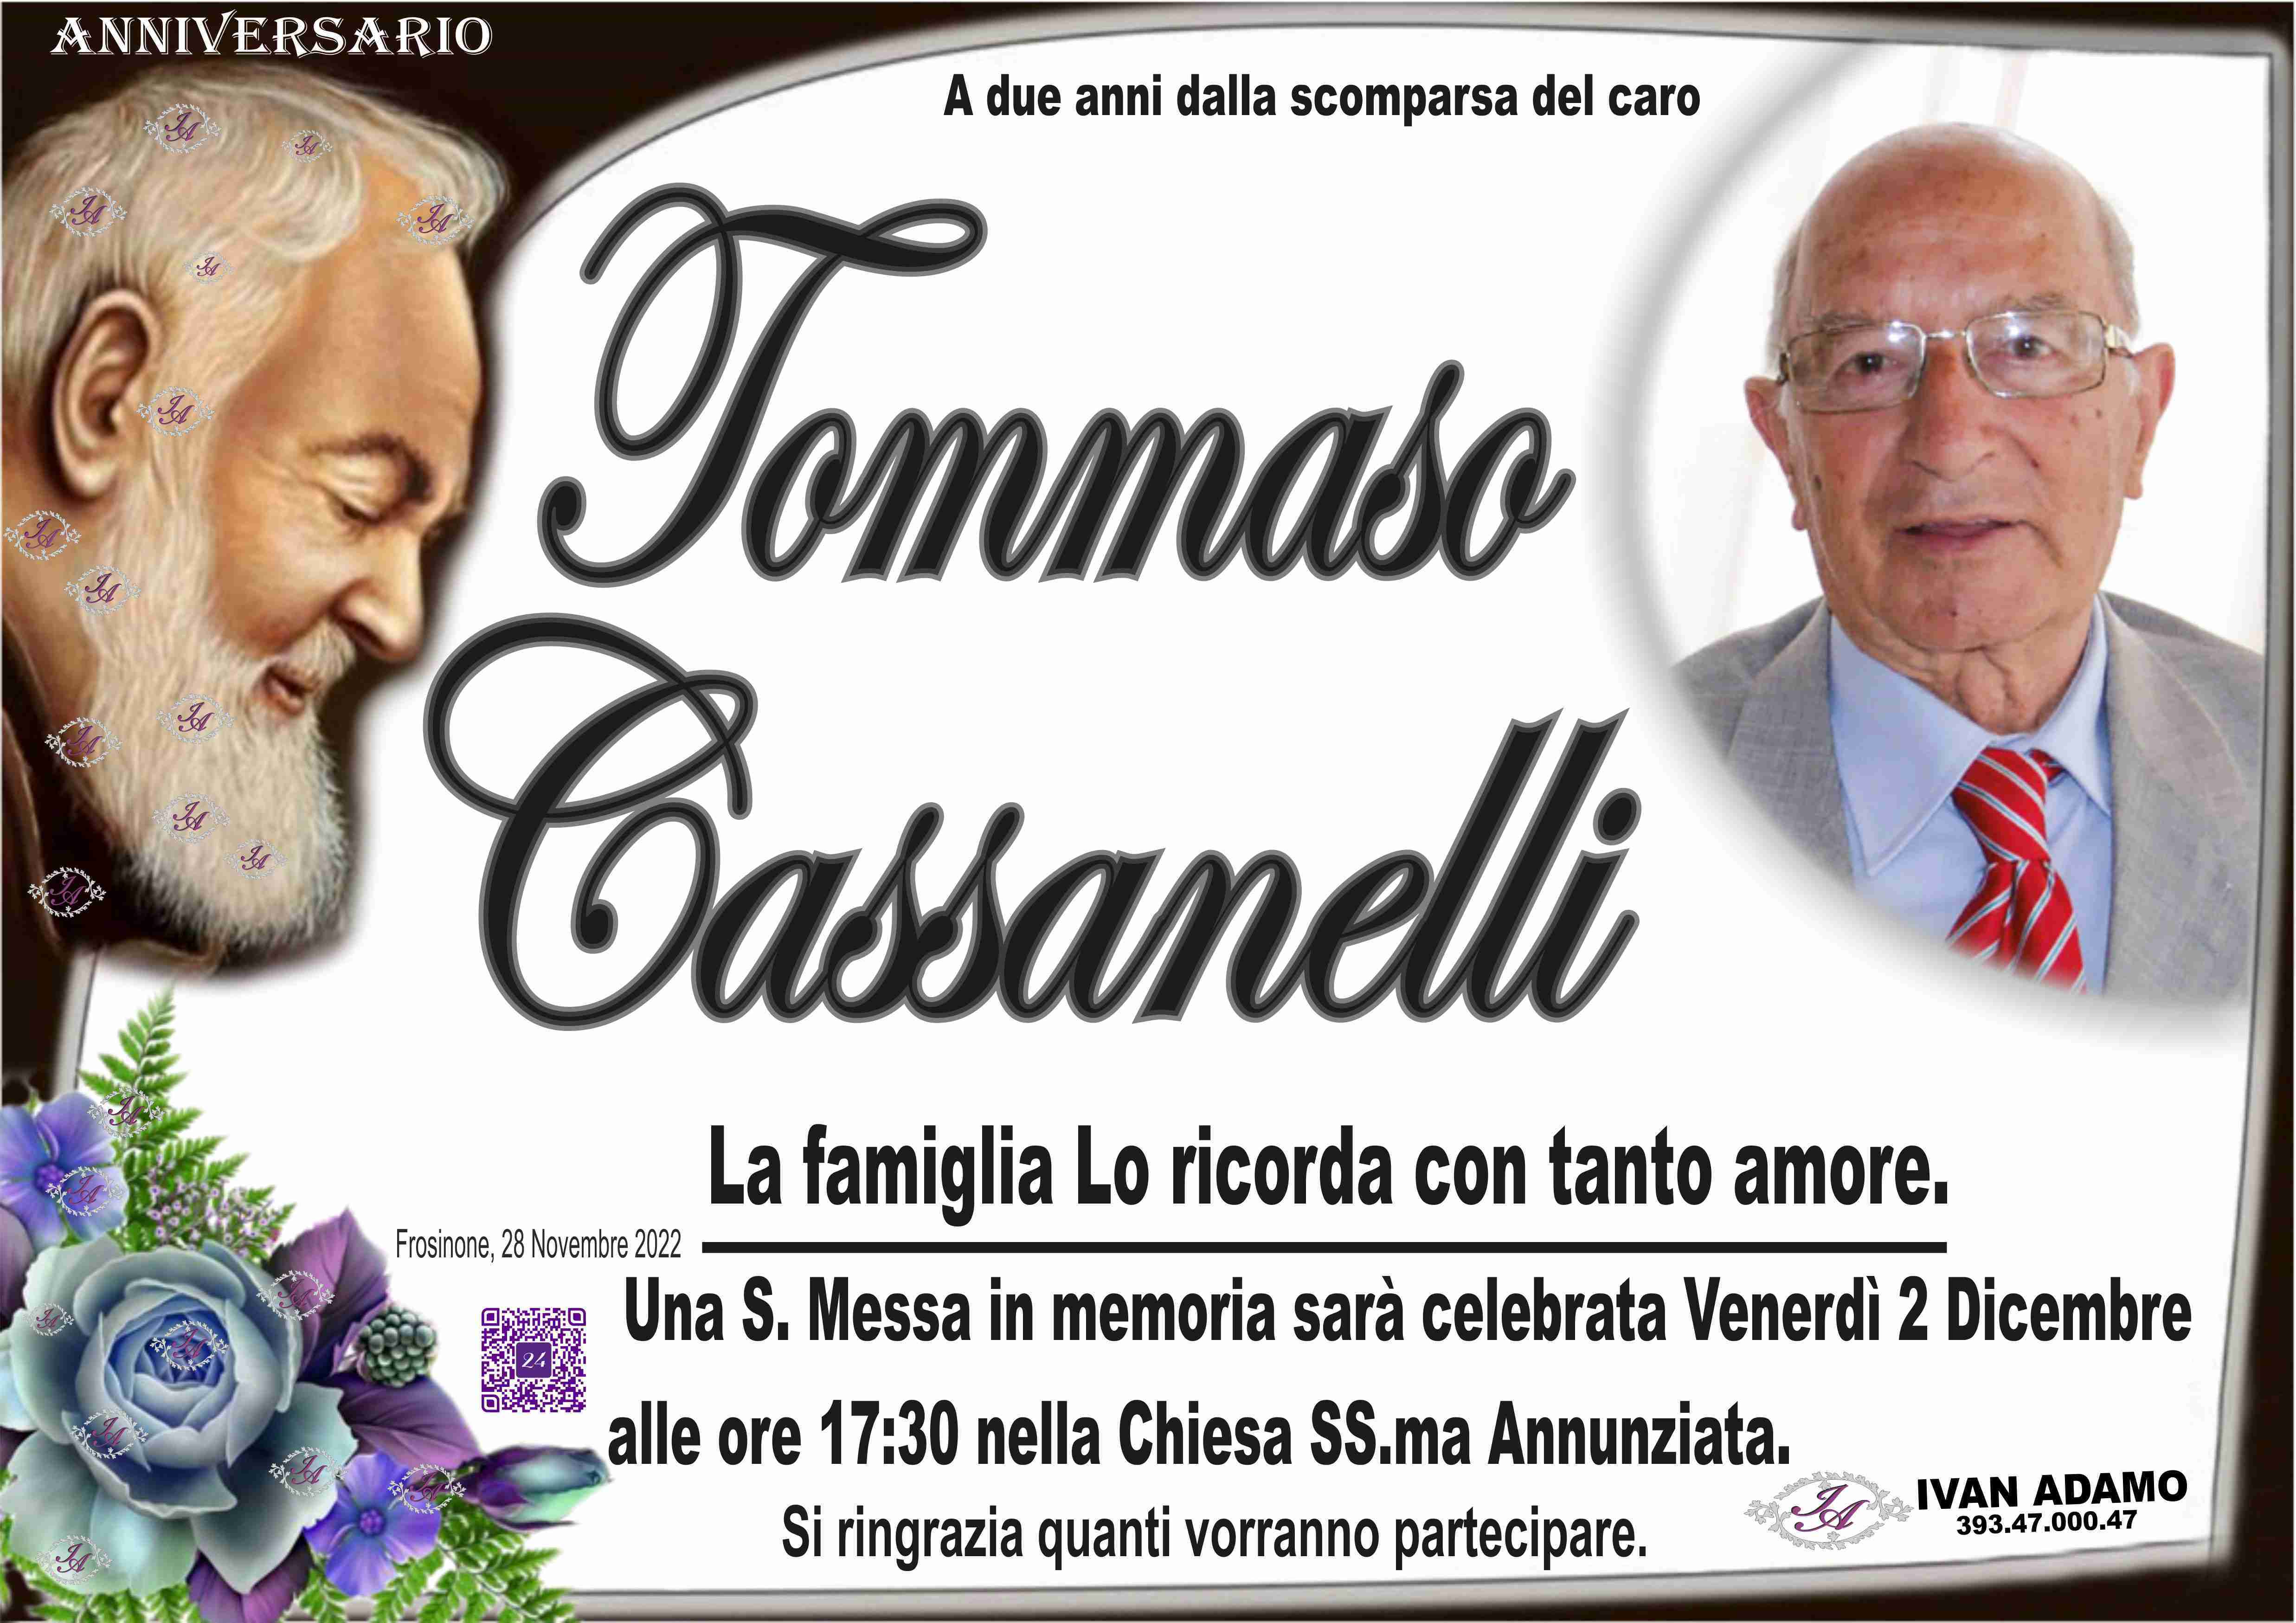 Tommaso Cassanelli